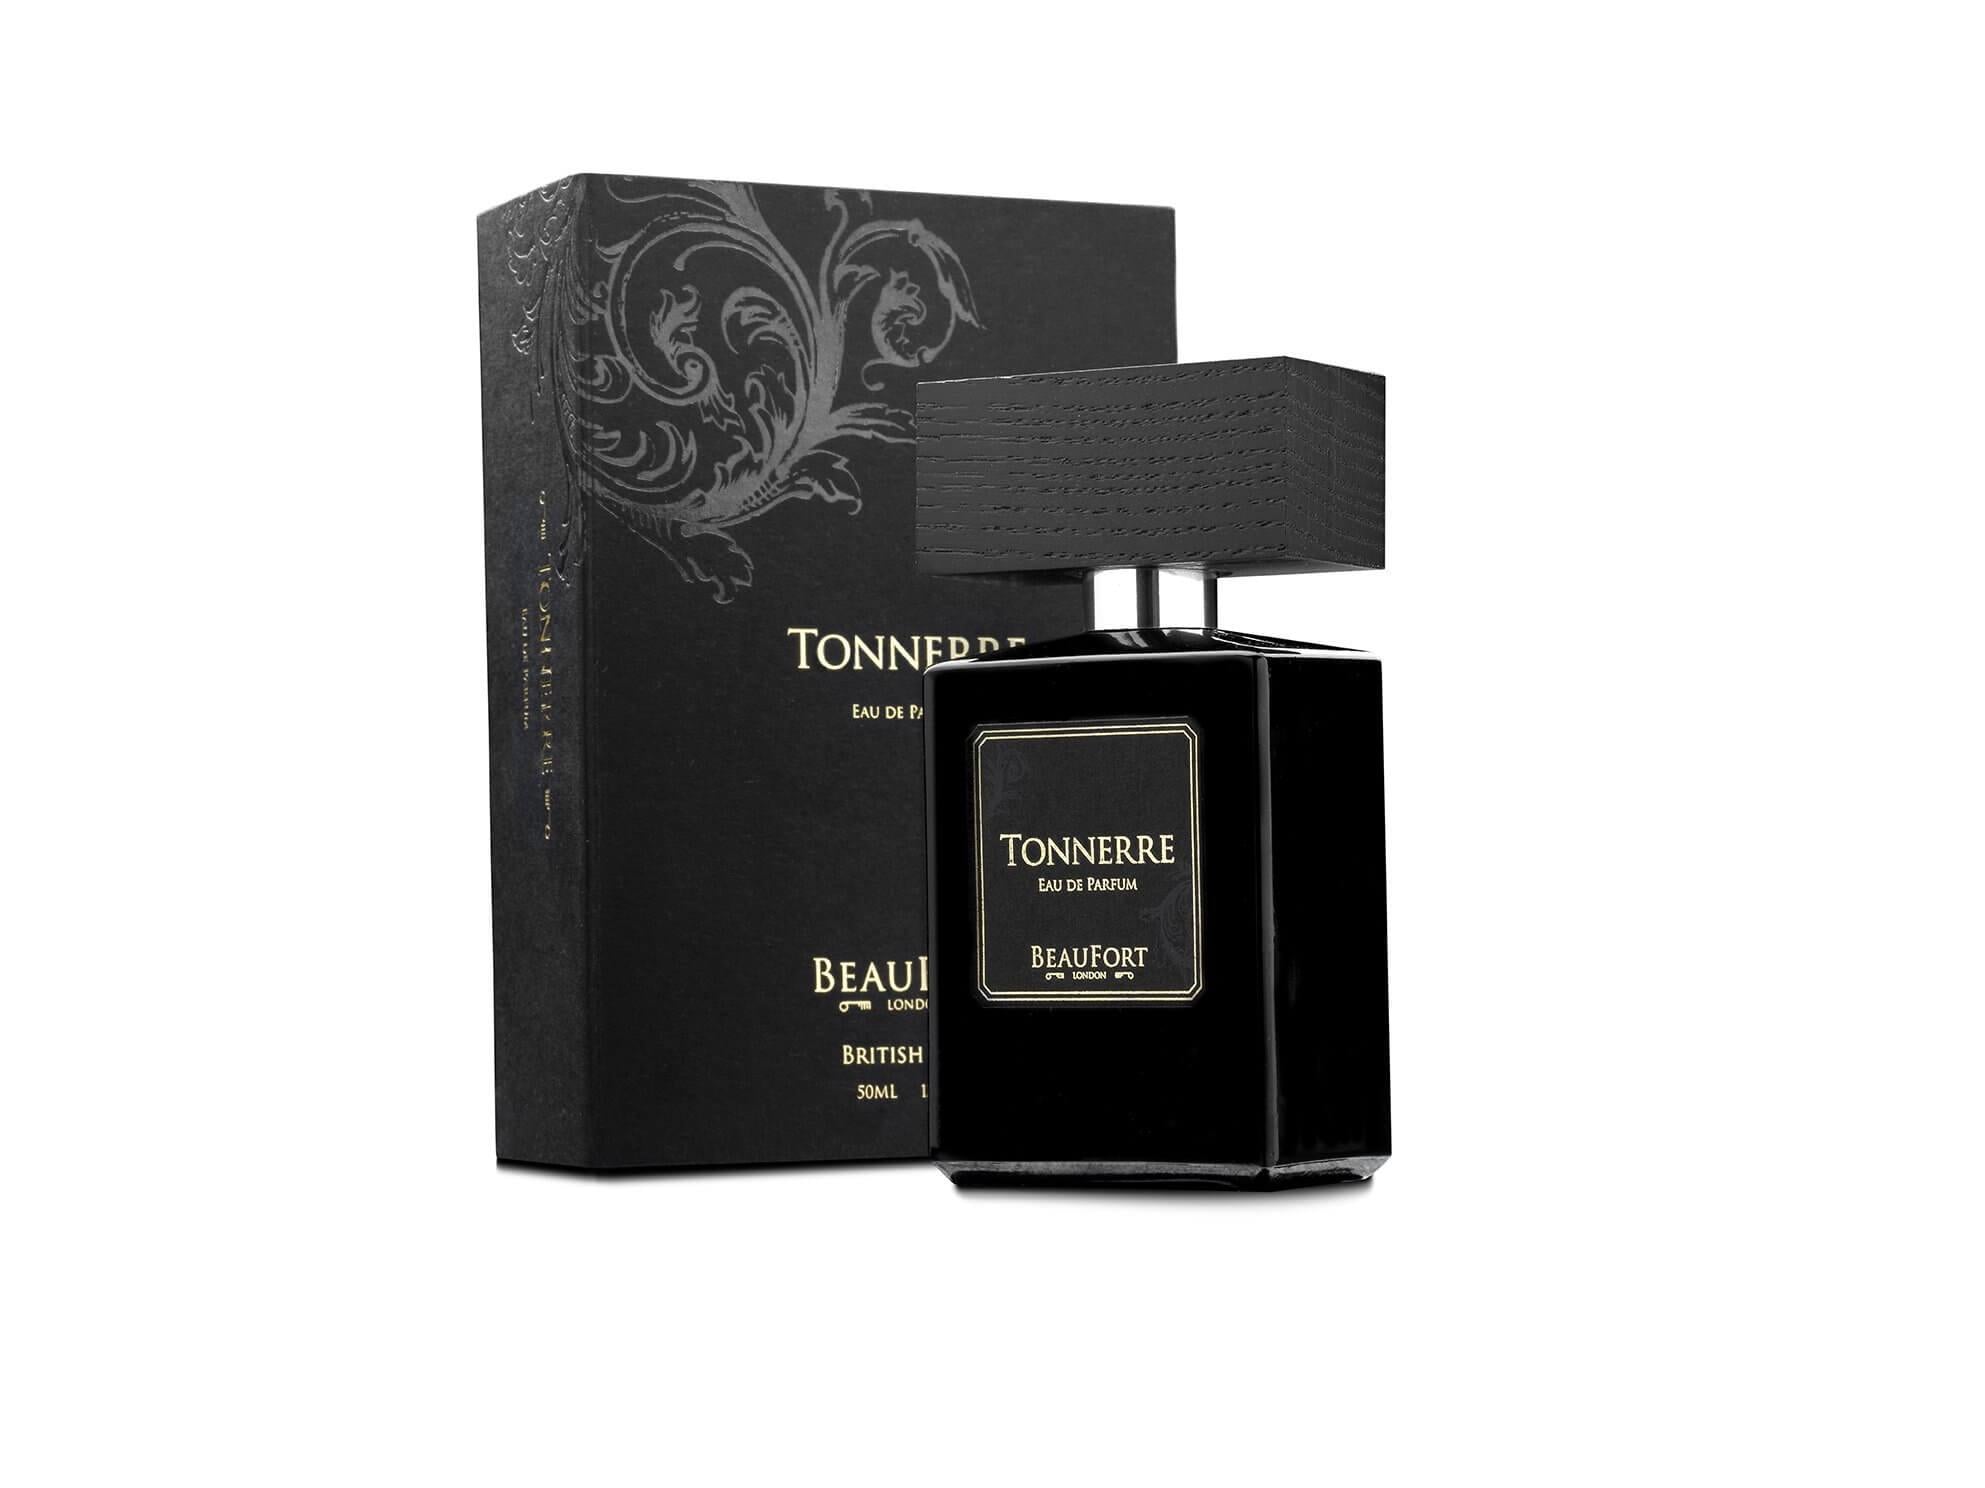 Tonnerre by BeauFort London - Indigo Perfumery